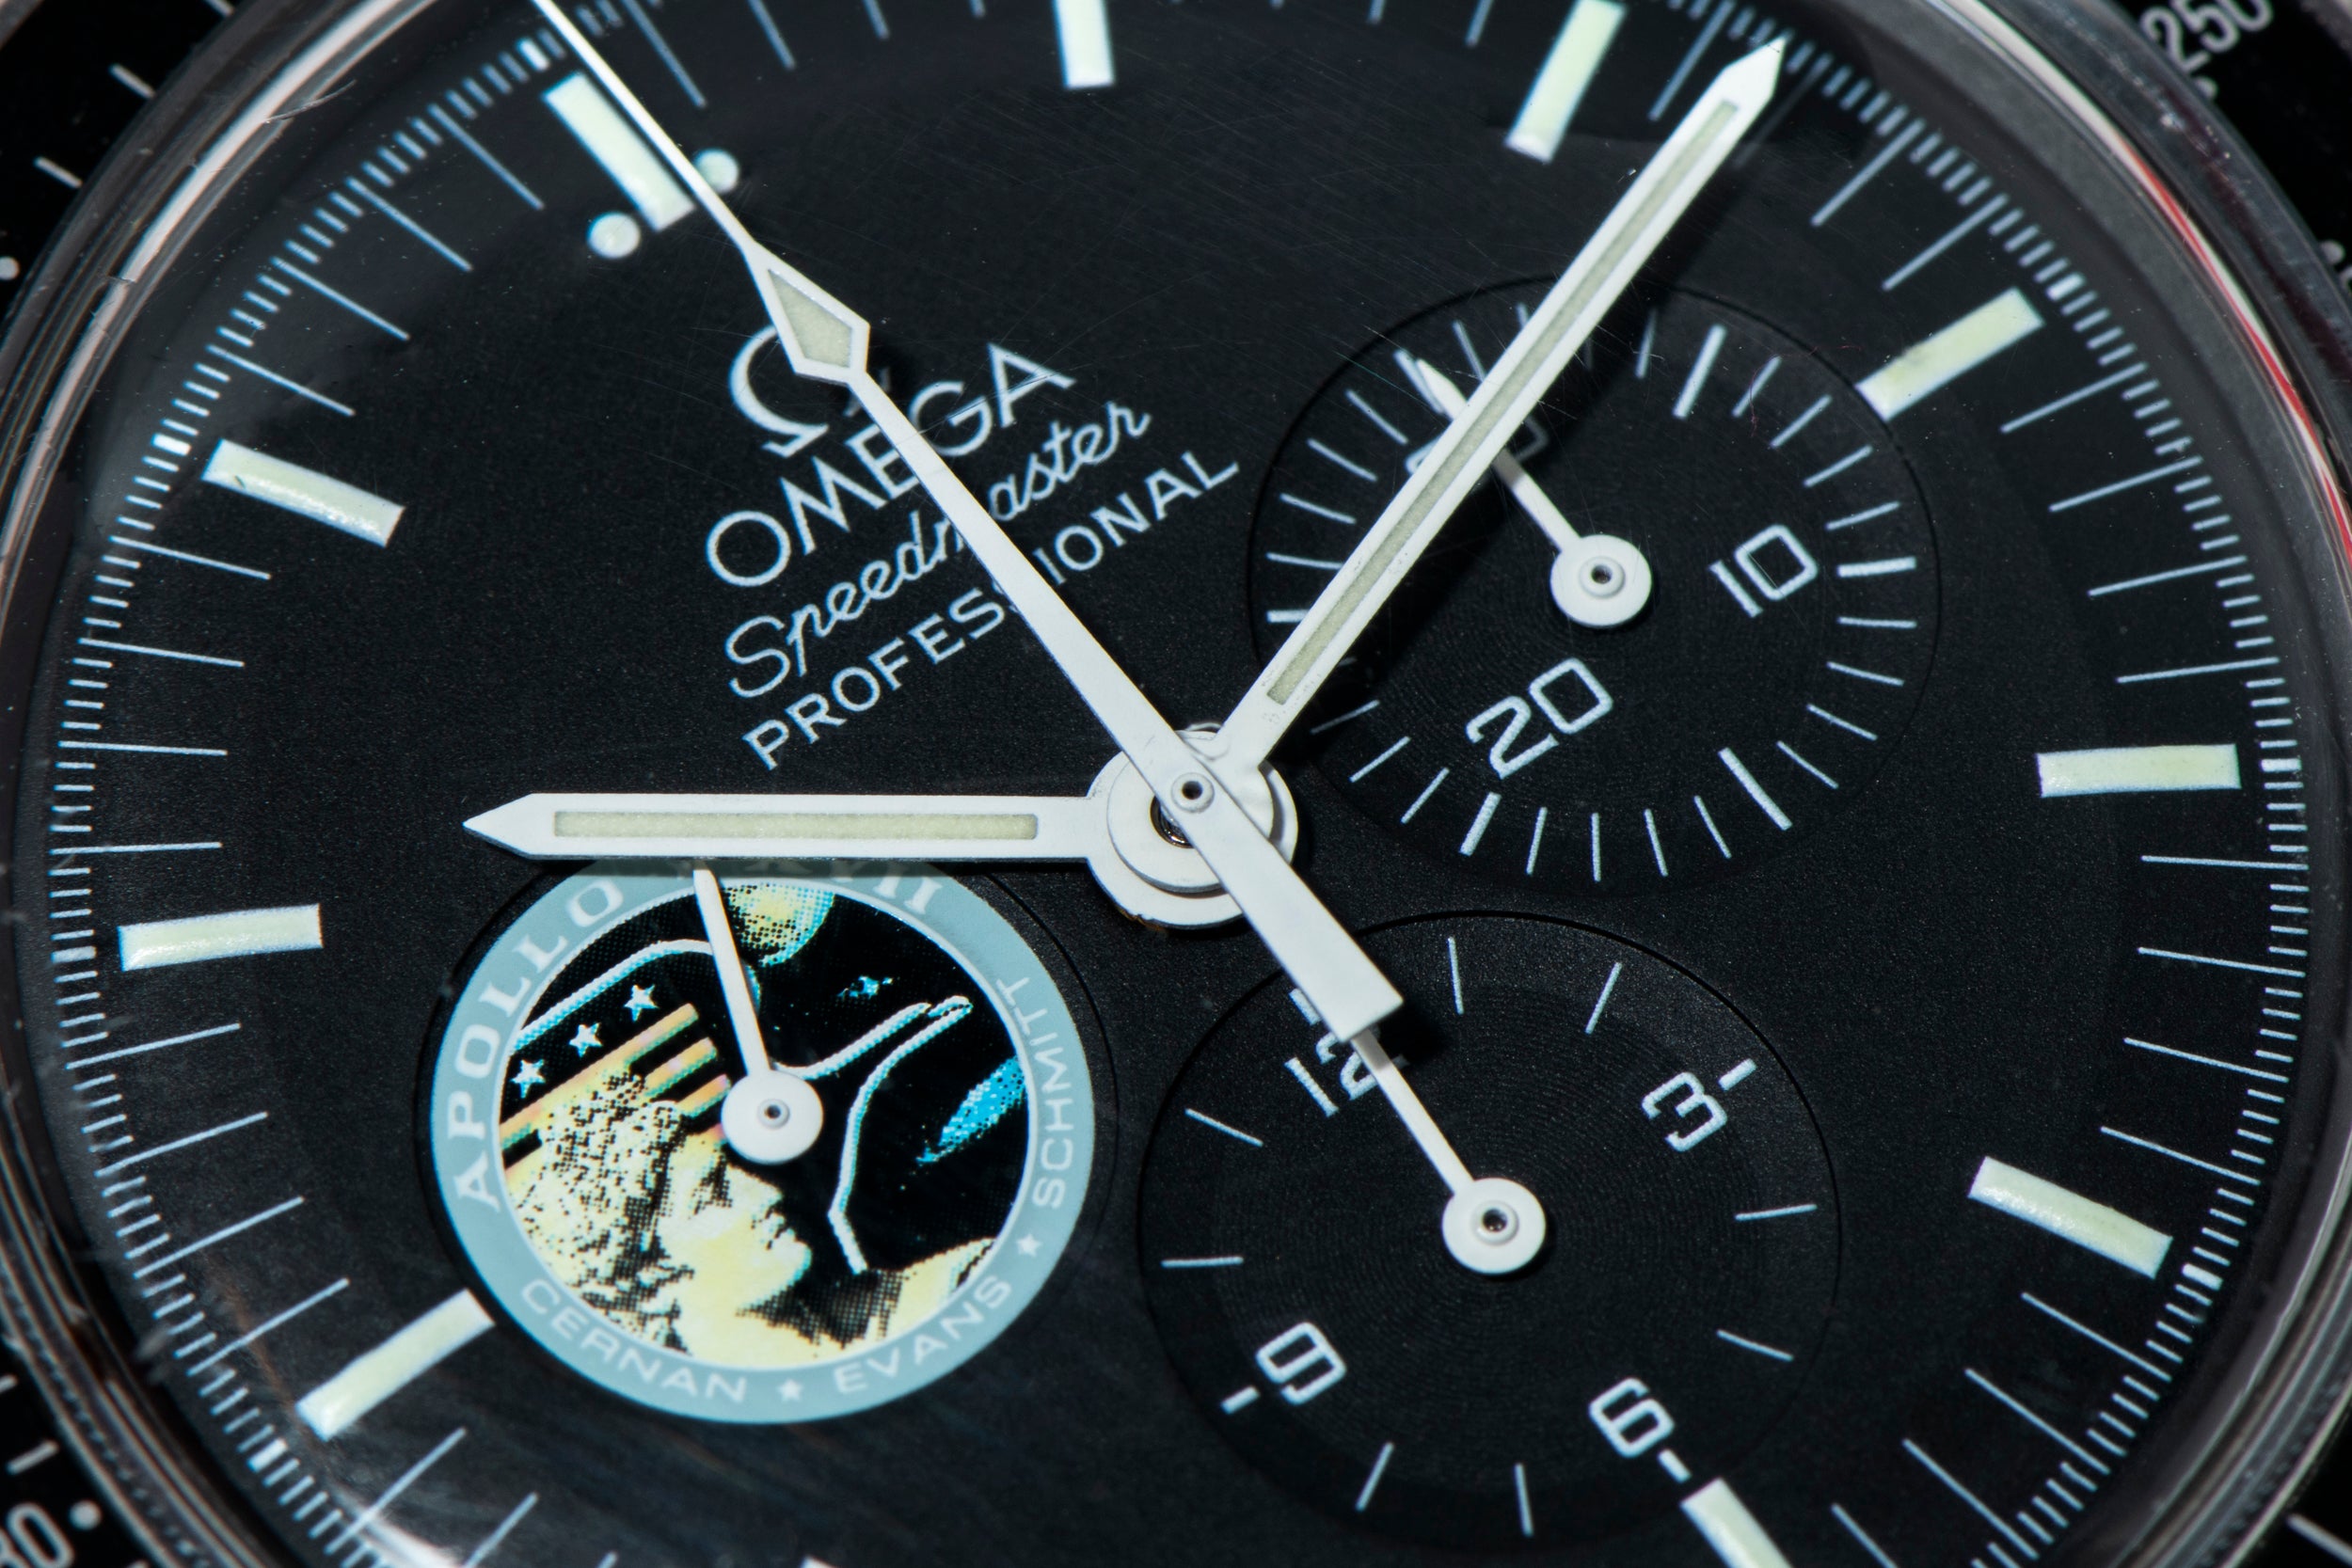 Omega Speedmaster 311.30.42.30.99.002 Apollo Xvii 40th Anniversary Limited  Edition Watch The Last Man on the Moon - Kimondo Watches